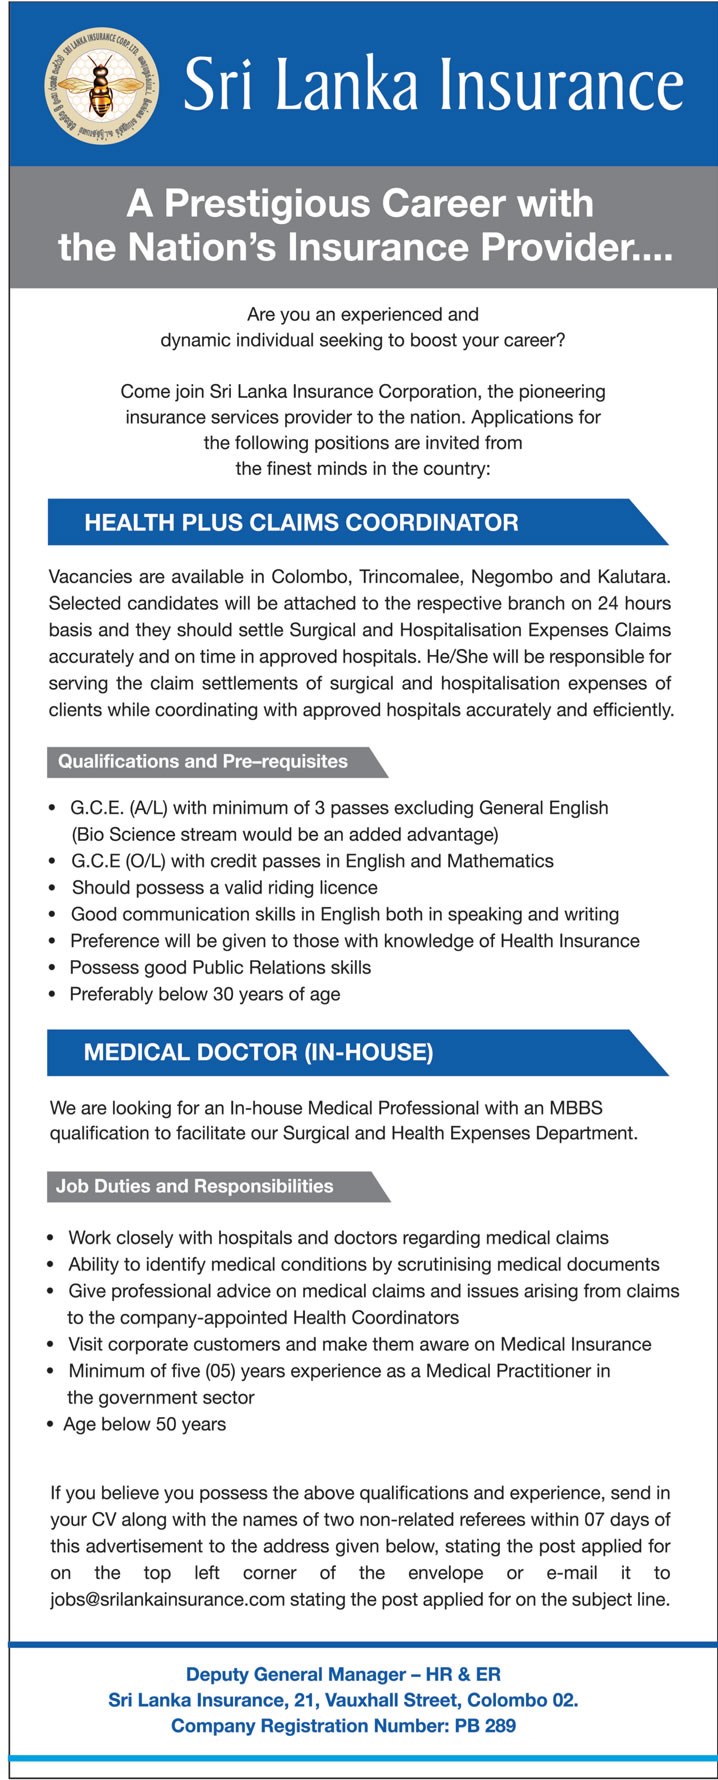 Health Plus Claims Coordinator / Medical Doctor / Bancassurance Sales Officer - Sri Lanka Insurance